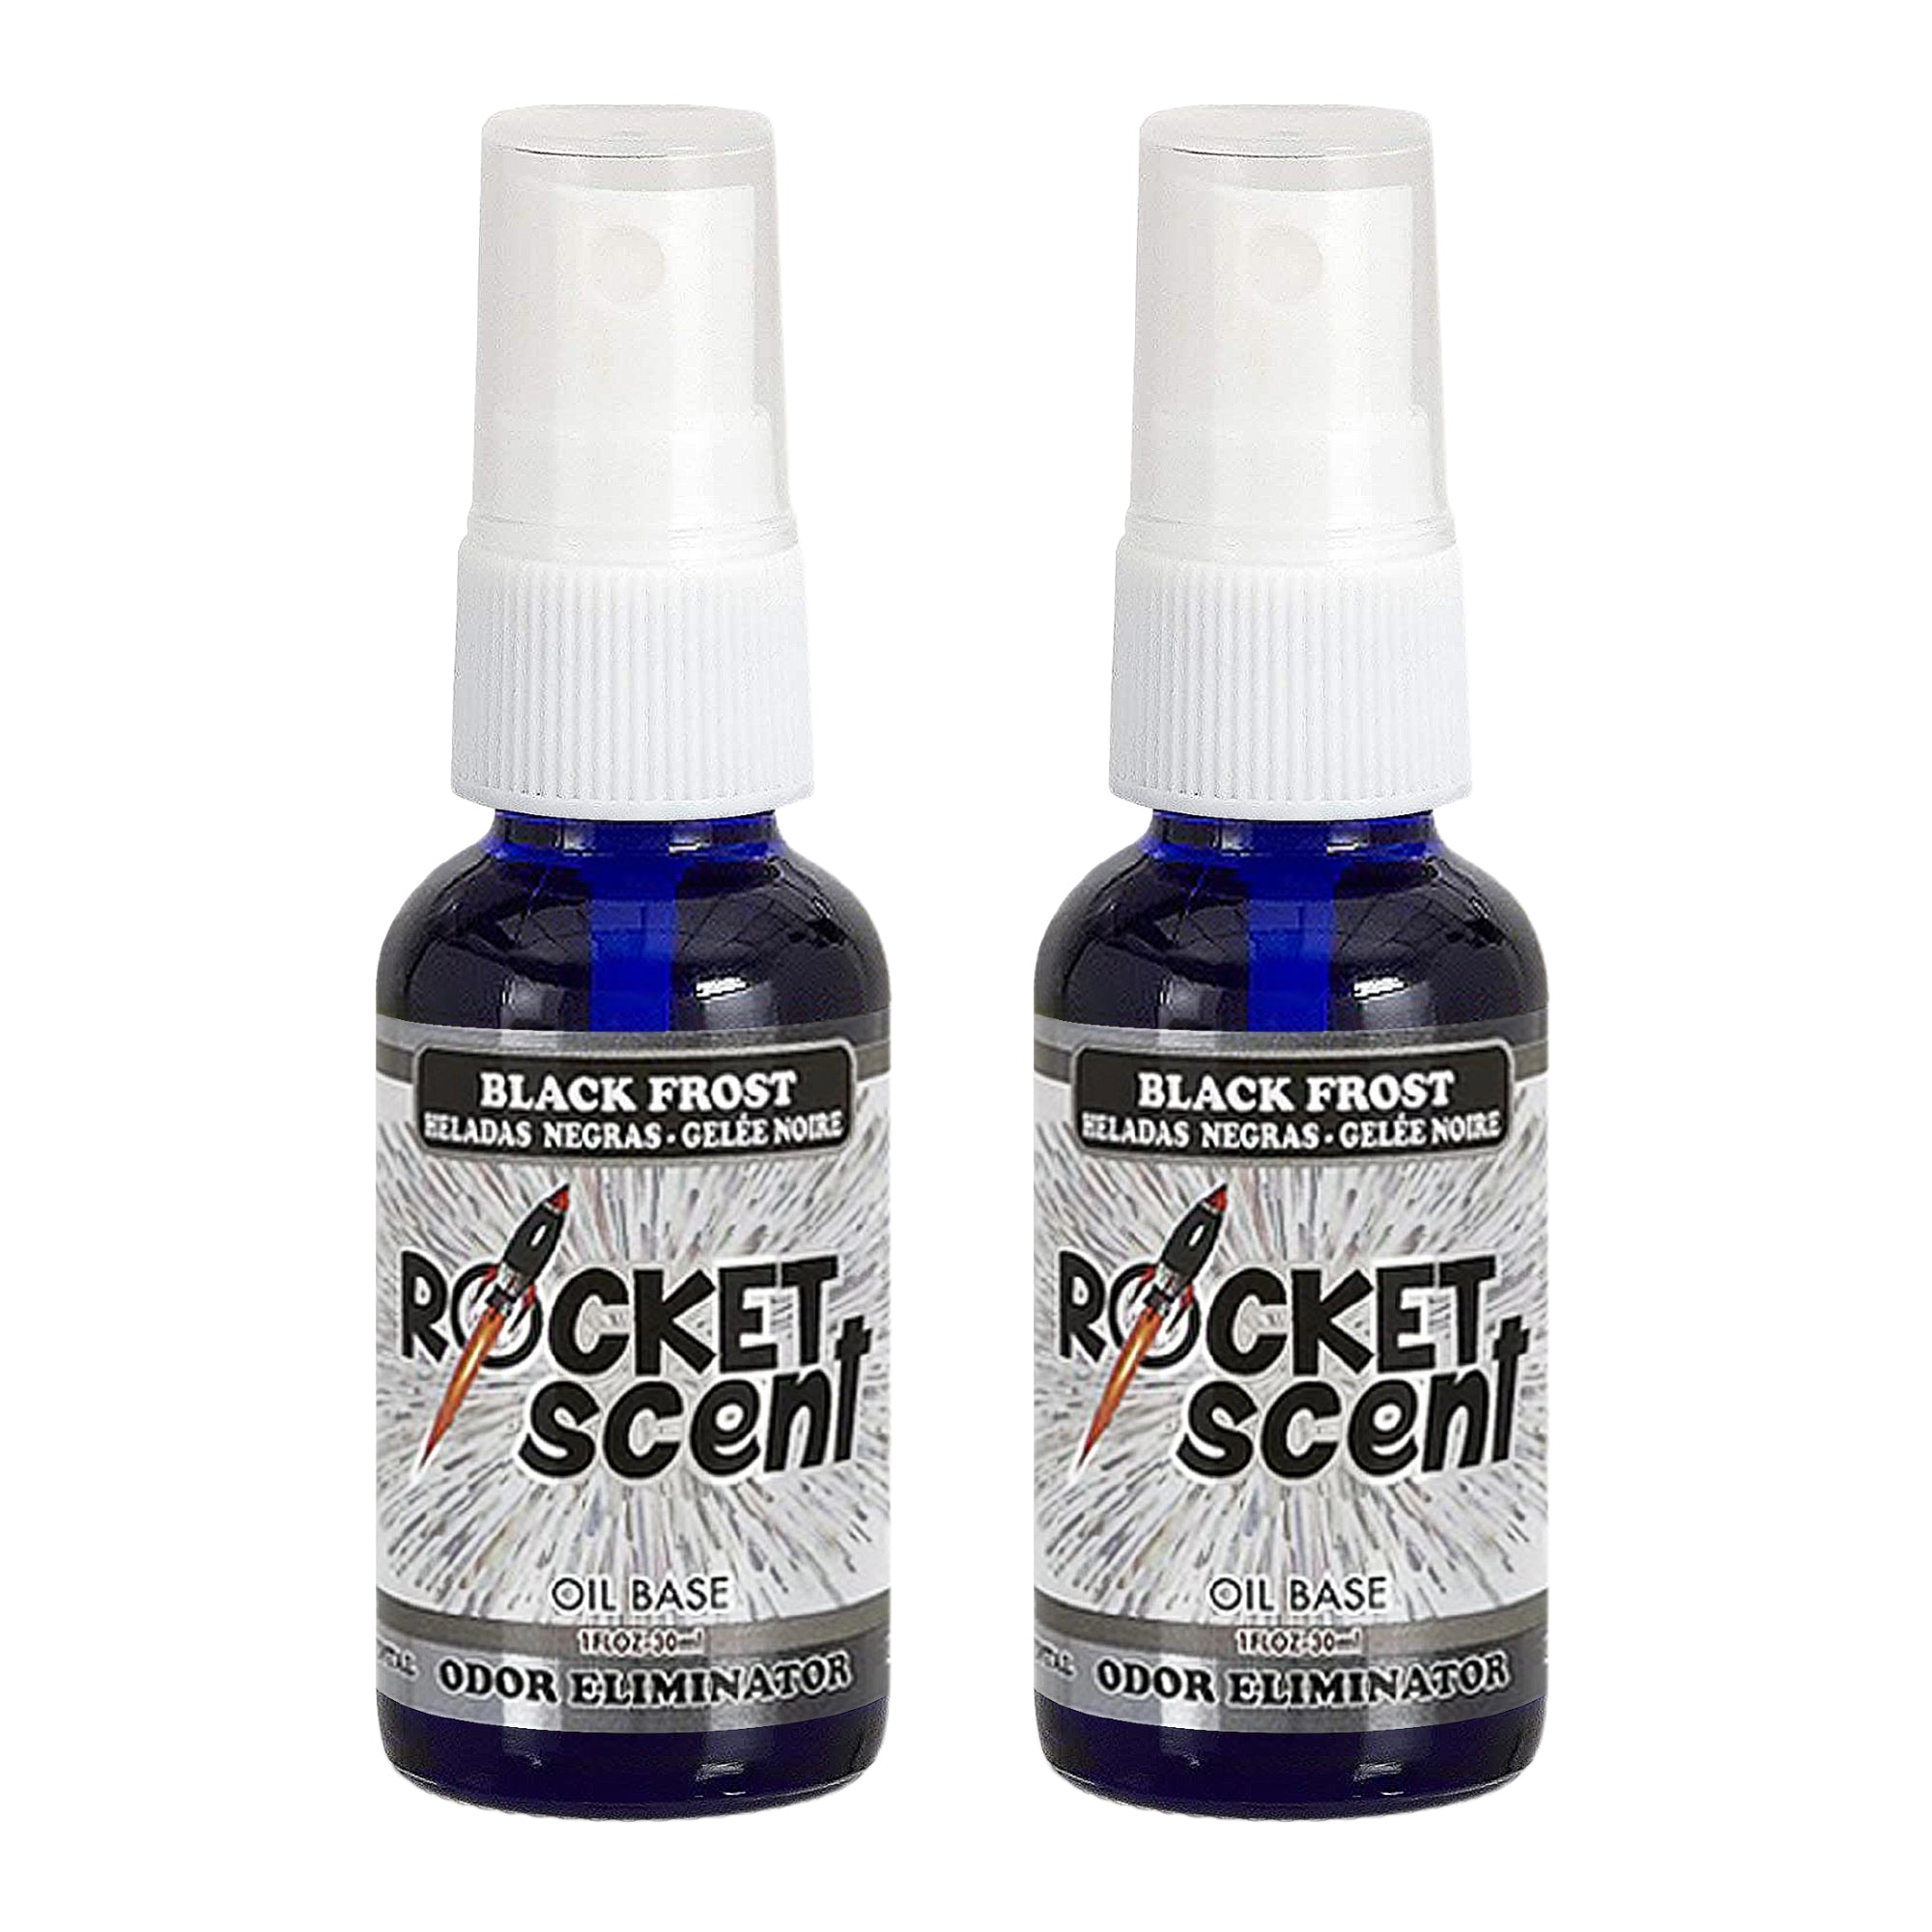 Rocket Scent for Air Fresheners, Odor Eliminator and Bathroom Deodorizer (2-Pack)